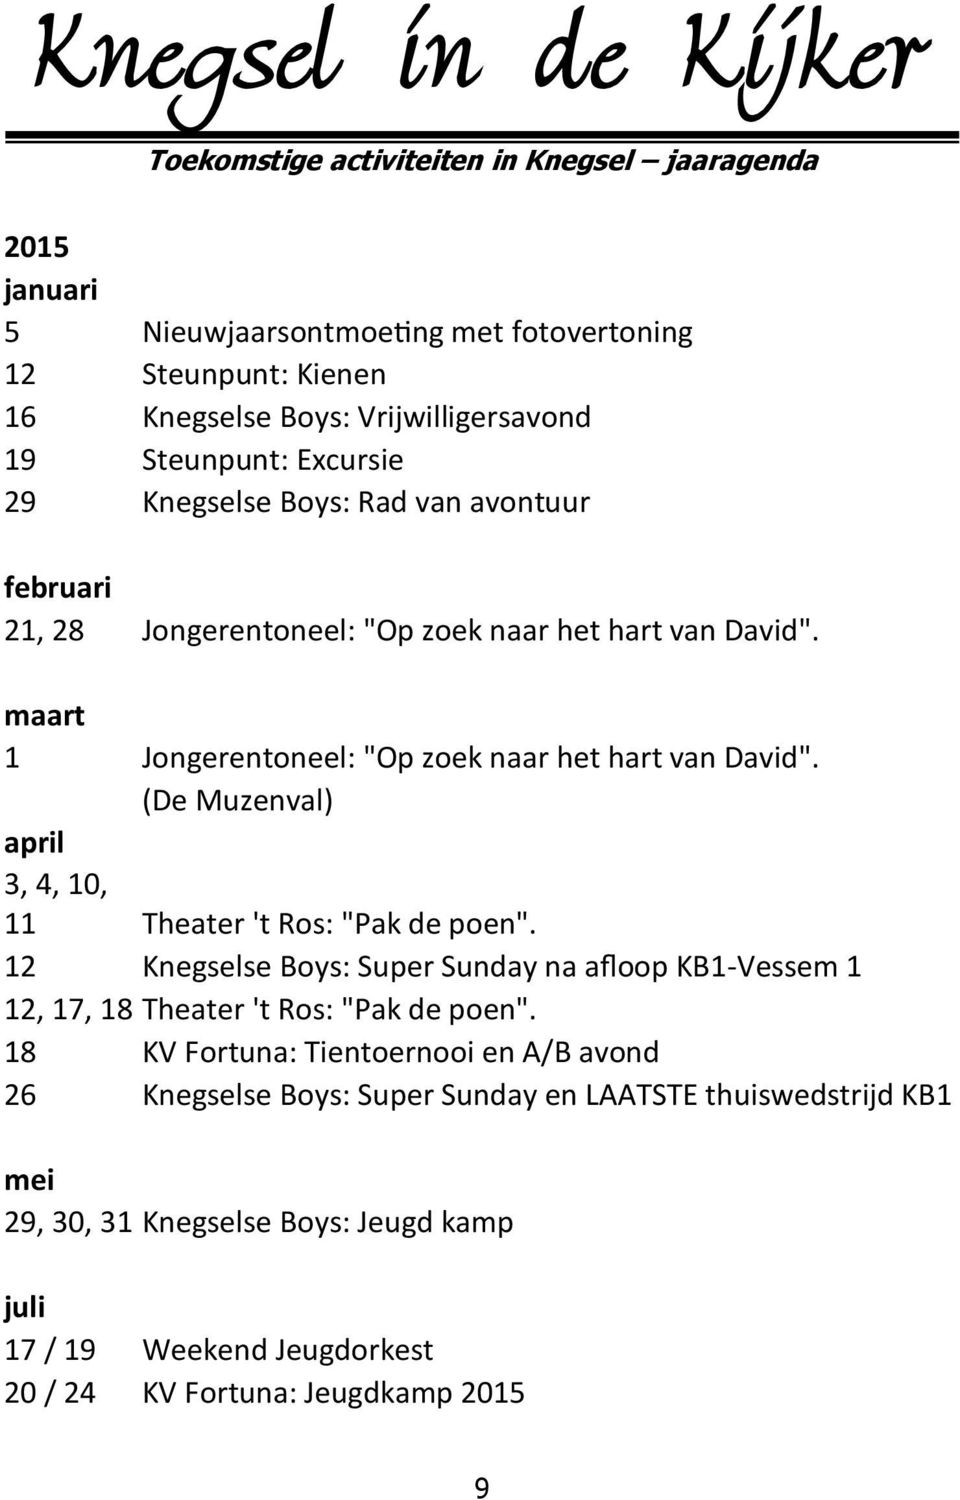 (De Muzenval) april 3, 4, 10, 11 Theater 't Ros: "Pak de poen". 12 Knegselse Boys: Super Sunday na afloop KB1-Vessem 1 12, 17, 18 Theater 't Ros: "Pak de poen".